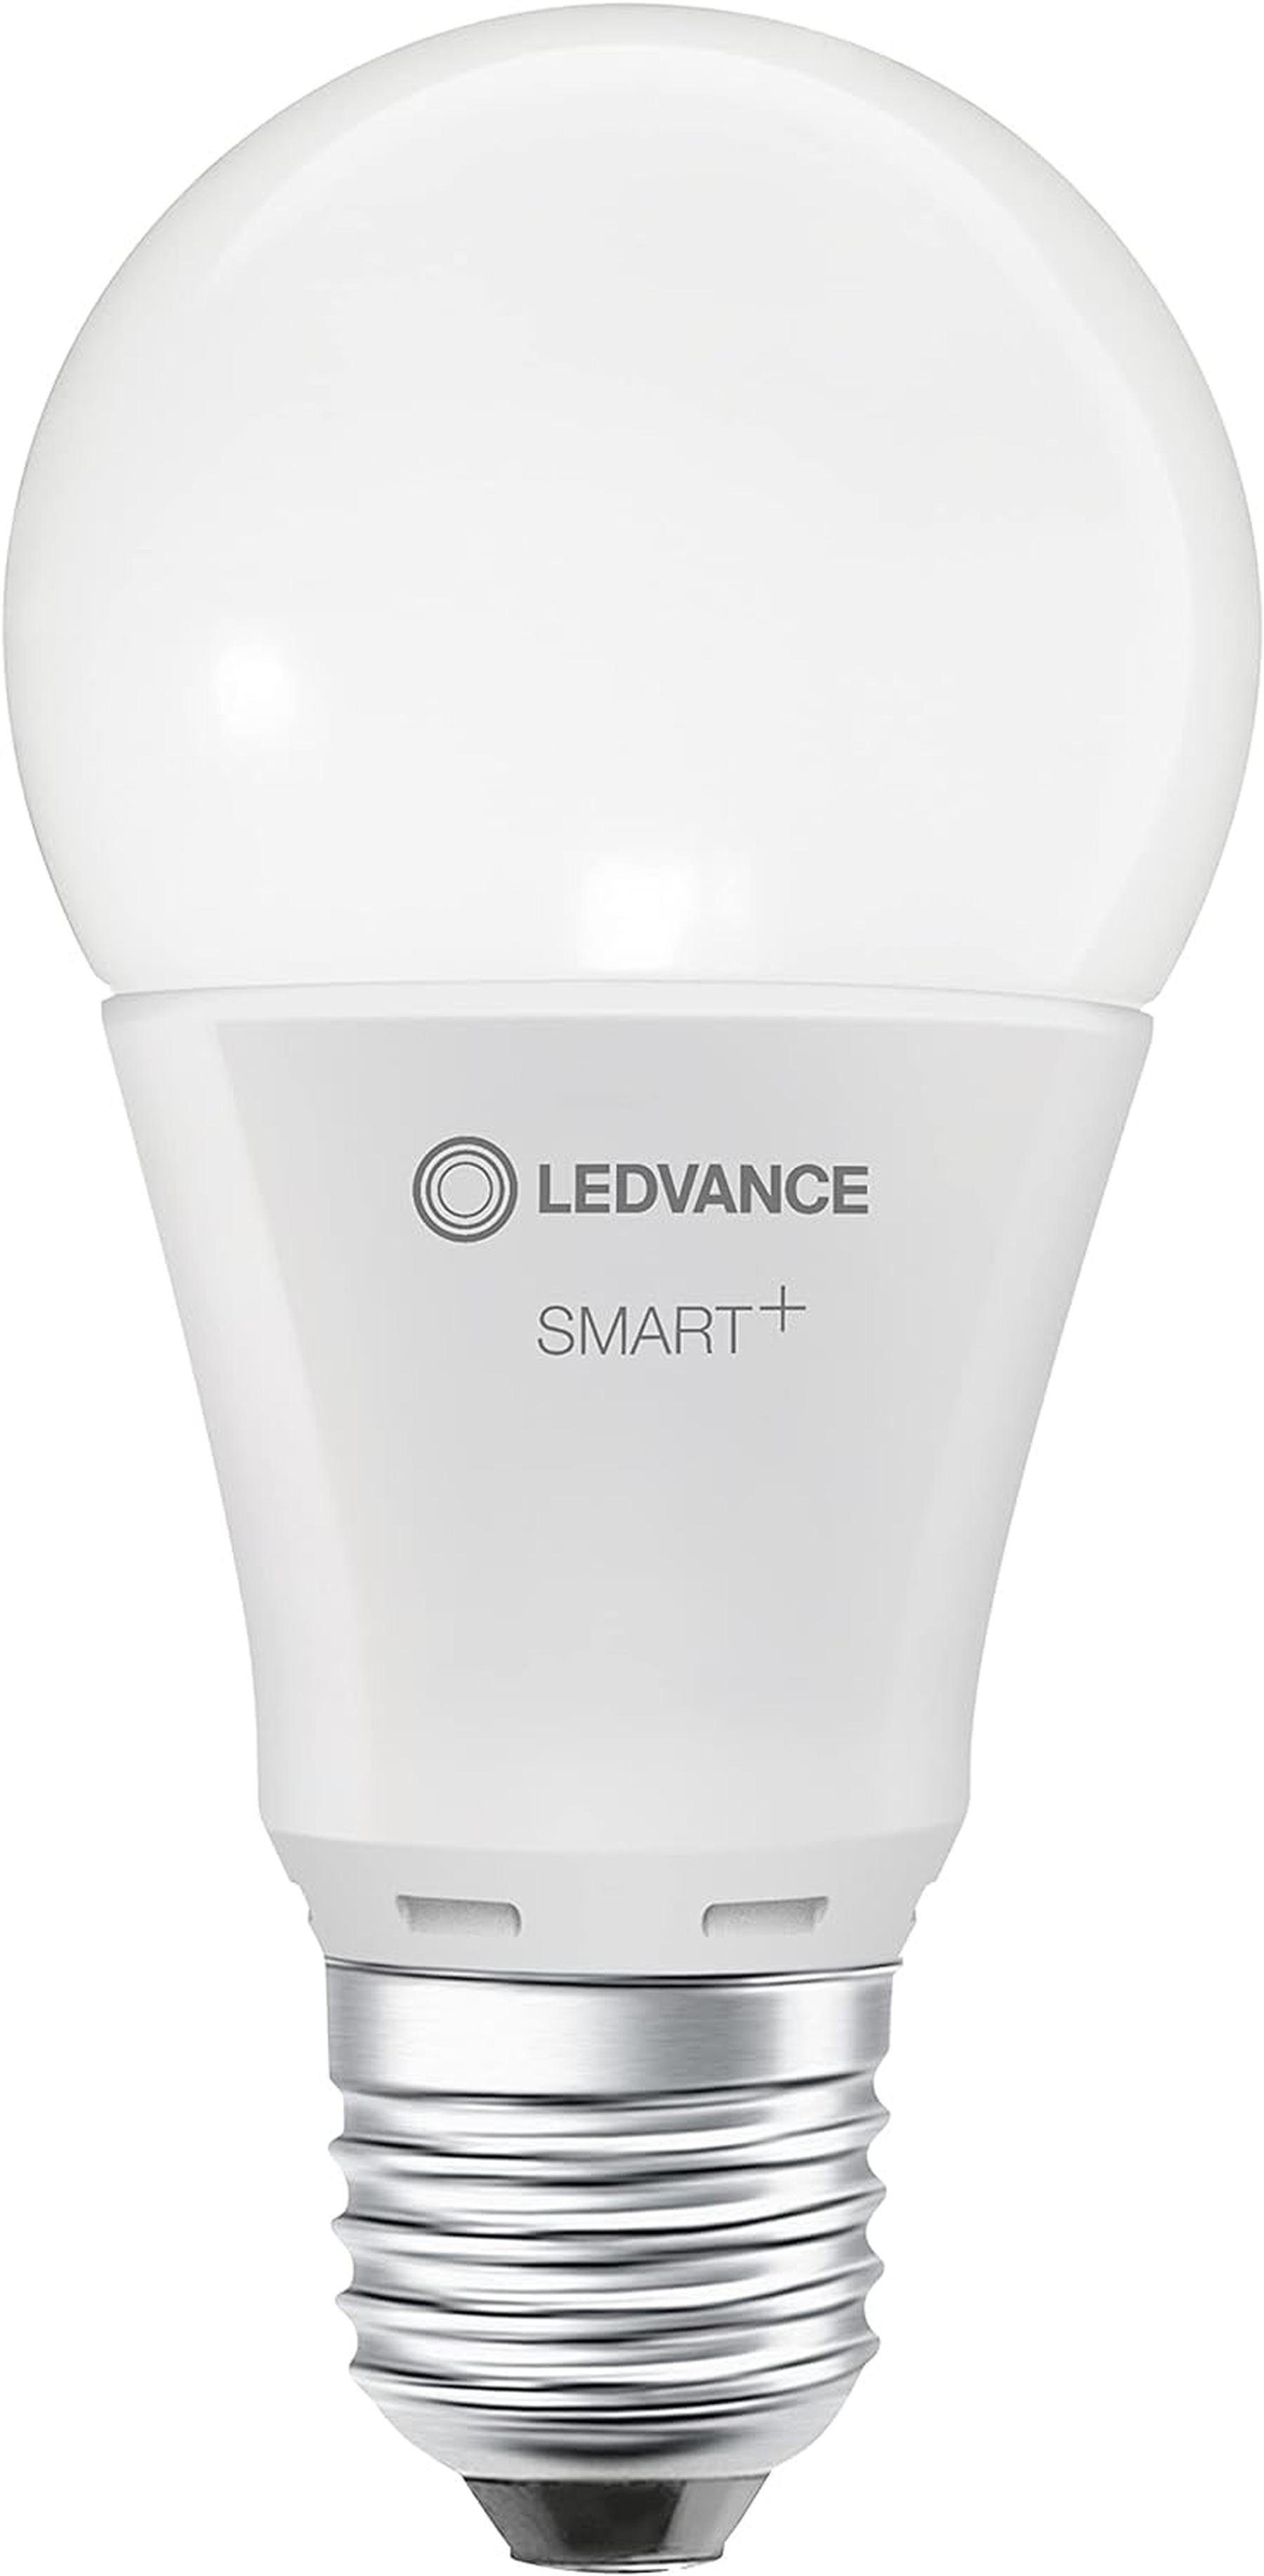 Ledvance LED-Leuchtmittel Ledvance Smart+ LED Lampe mit WiFi